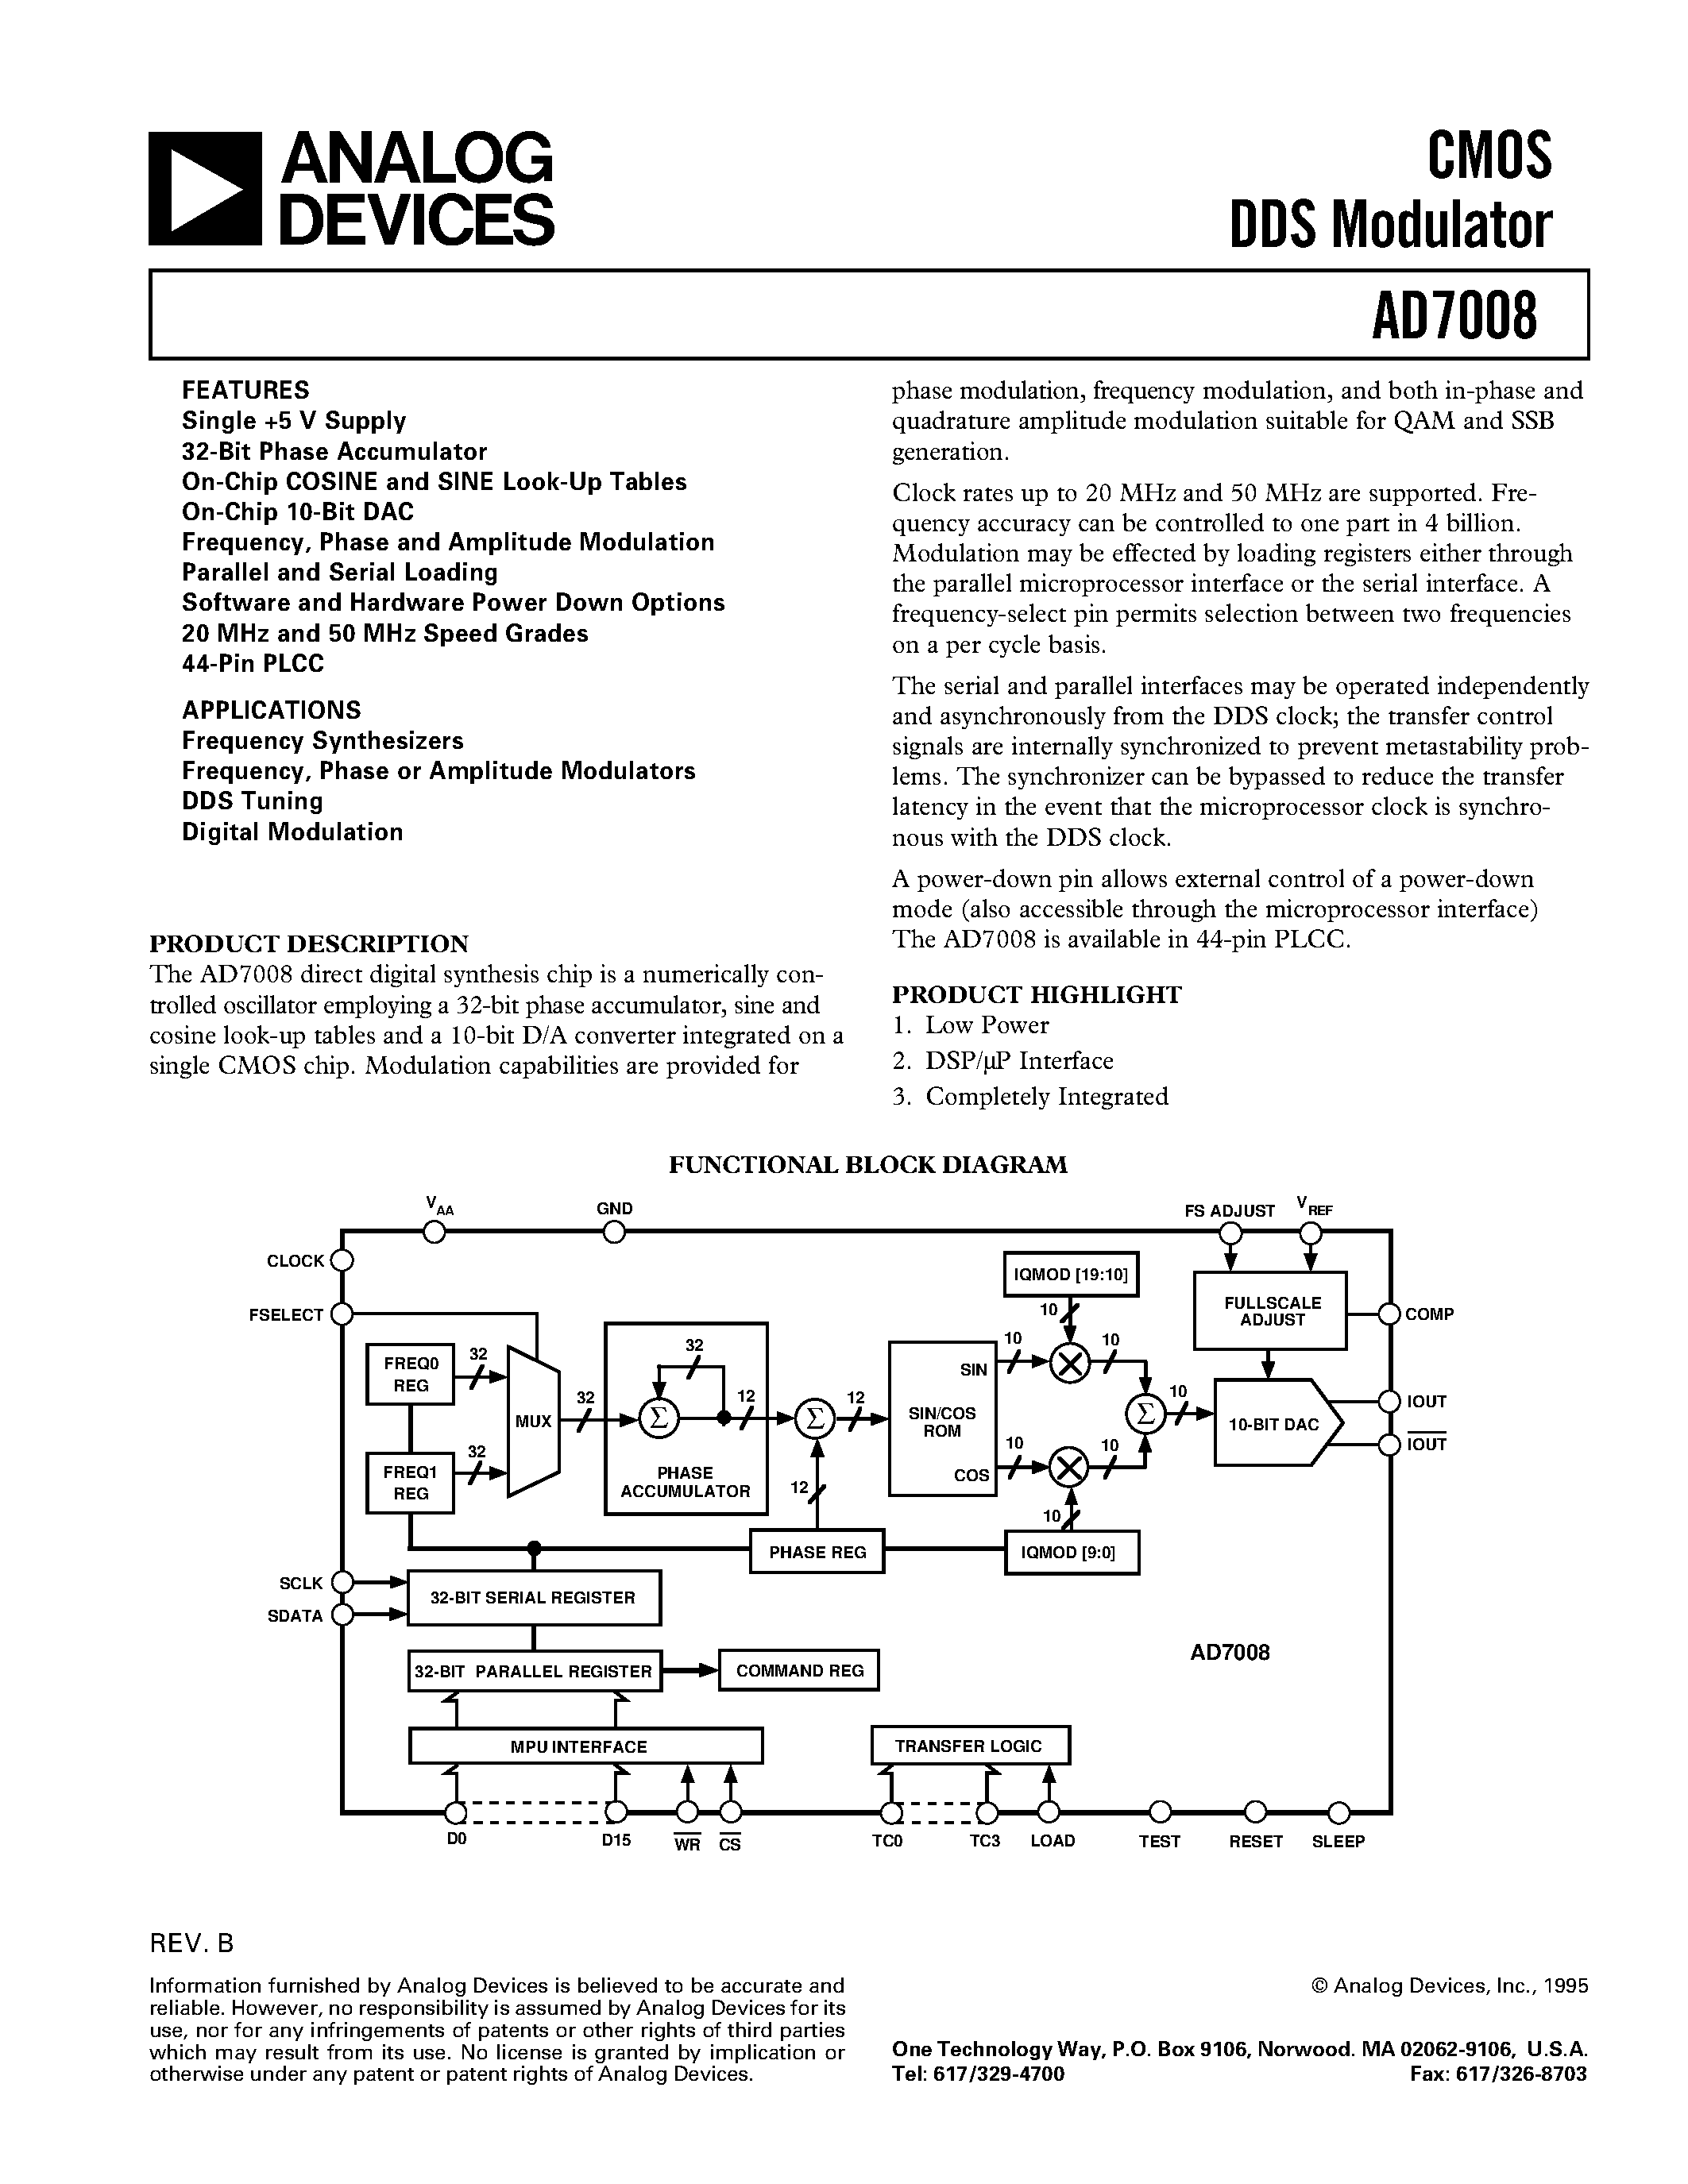 Datasheet AD7008PCB - CMOS DDS Modulator page 1